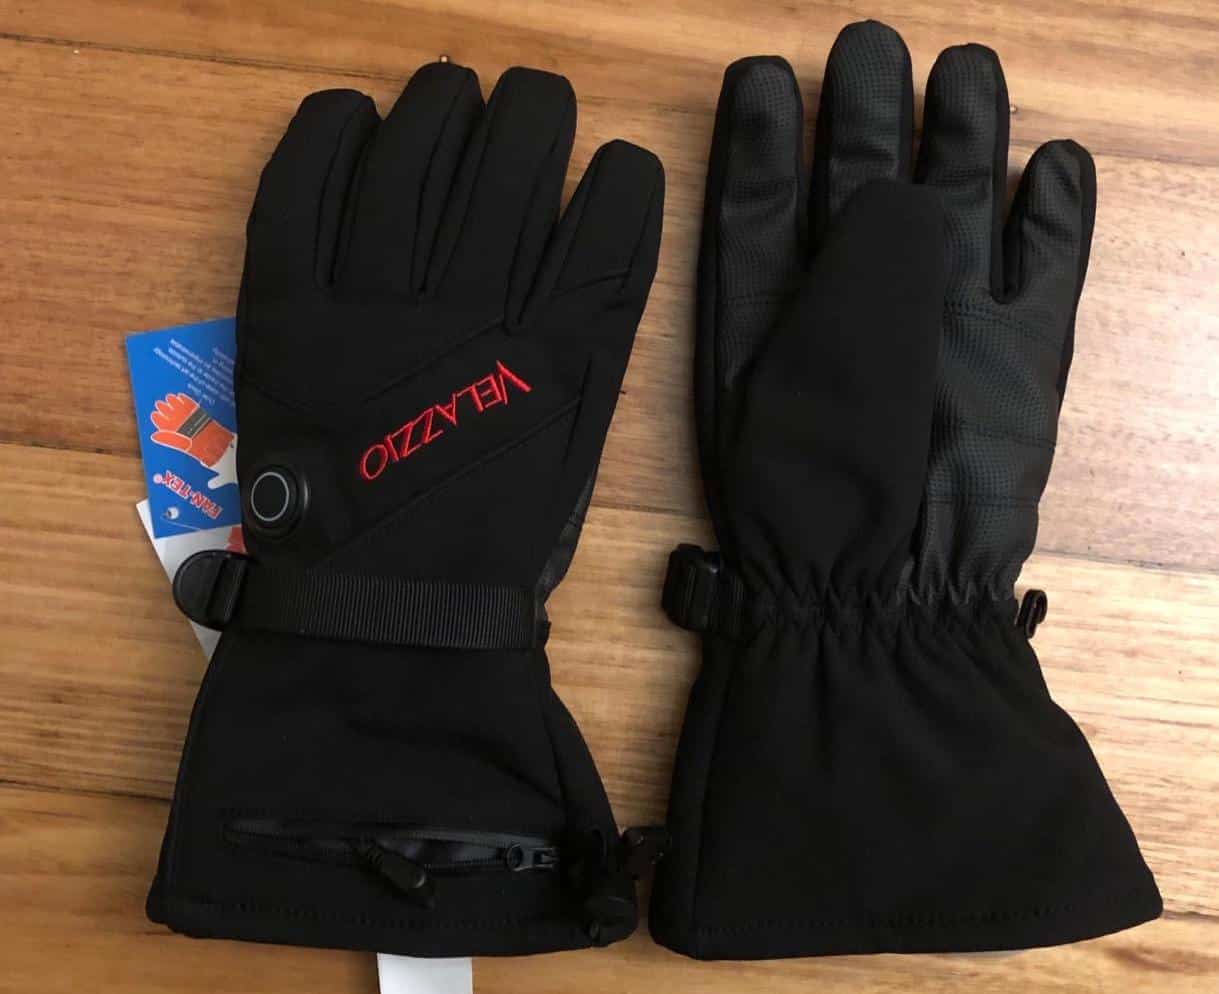 velazzio heated gloves reviews, velazzio heated ice fishing glove reviews, velazzio ski gloves, velazzio heated ski gloves